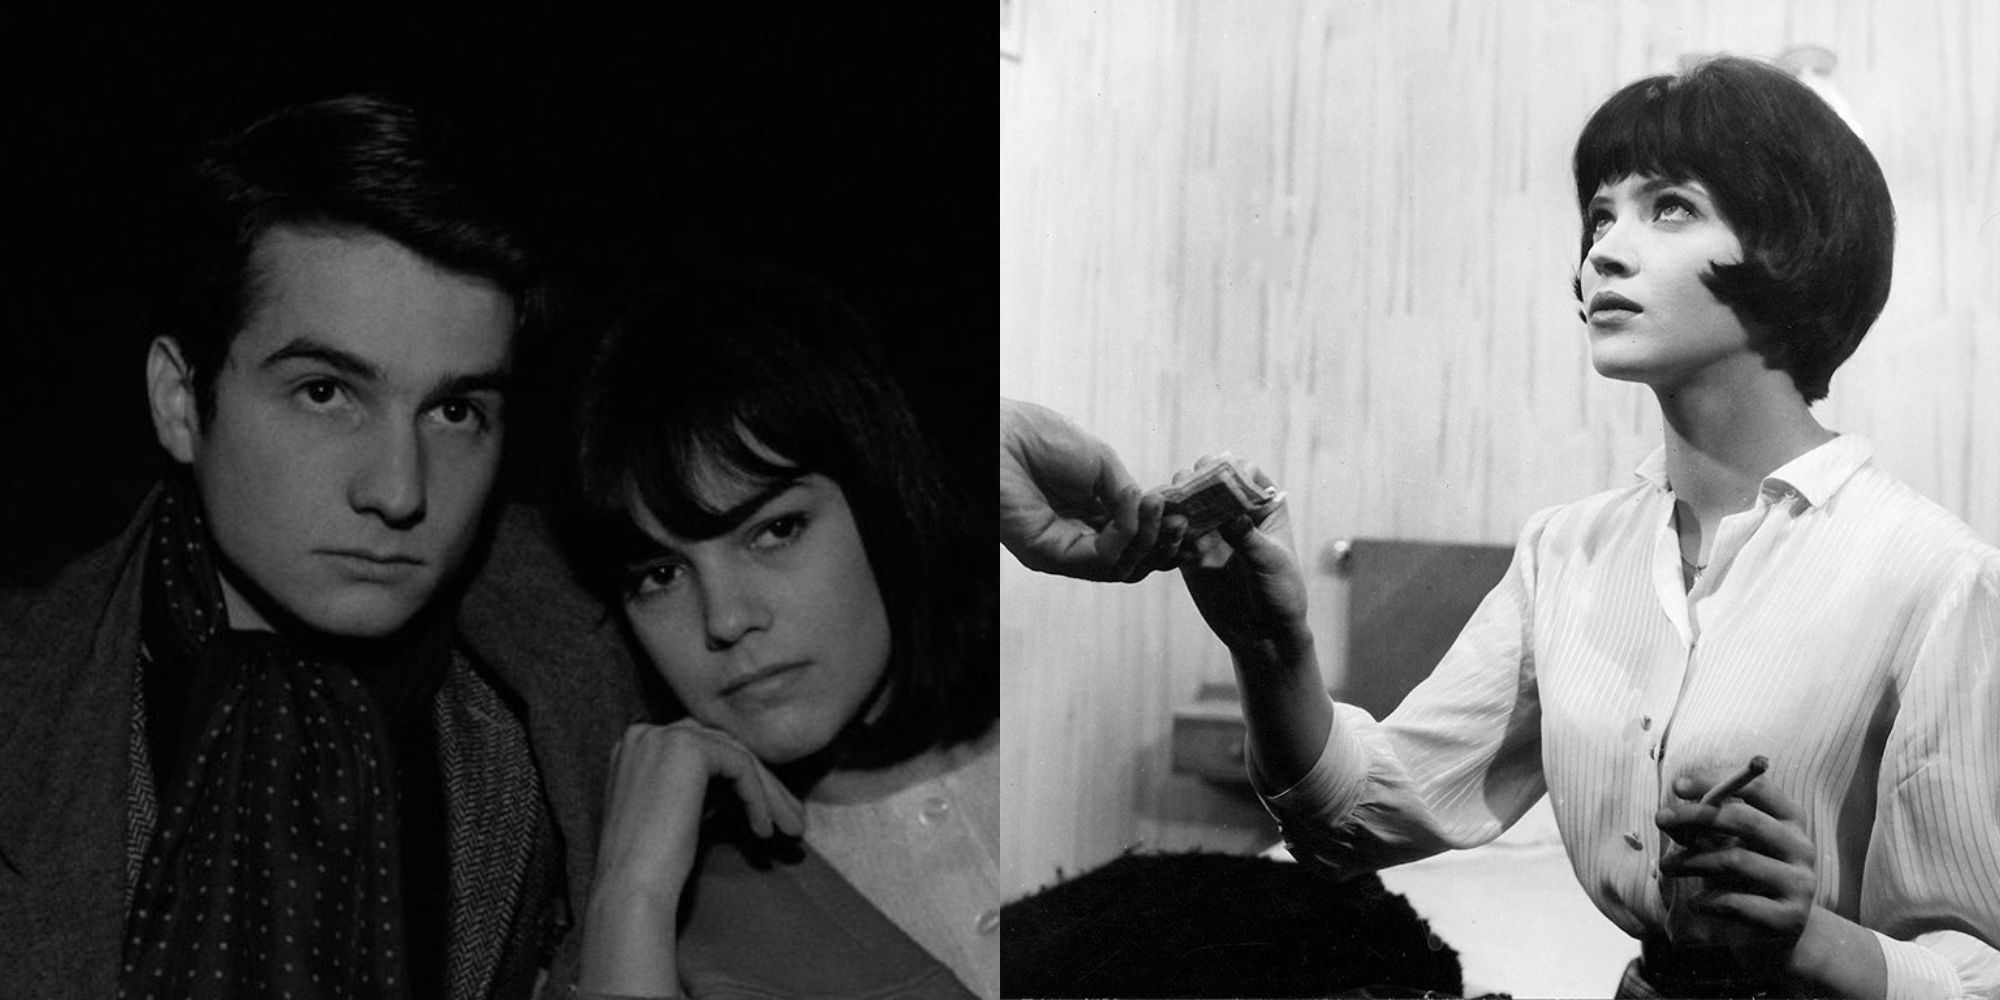 Jean-Luc Godard's 10 Best Movies, Ranked According To IMDb